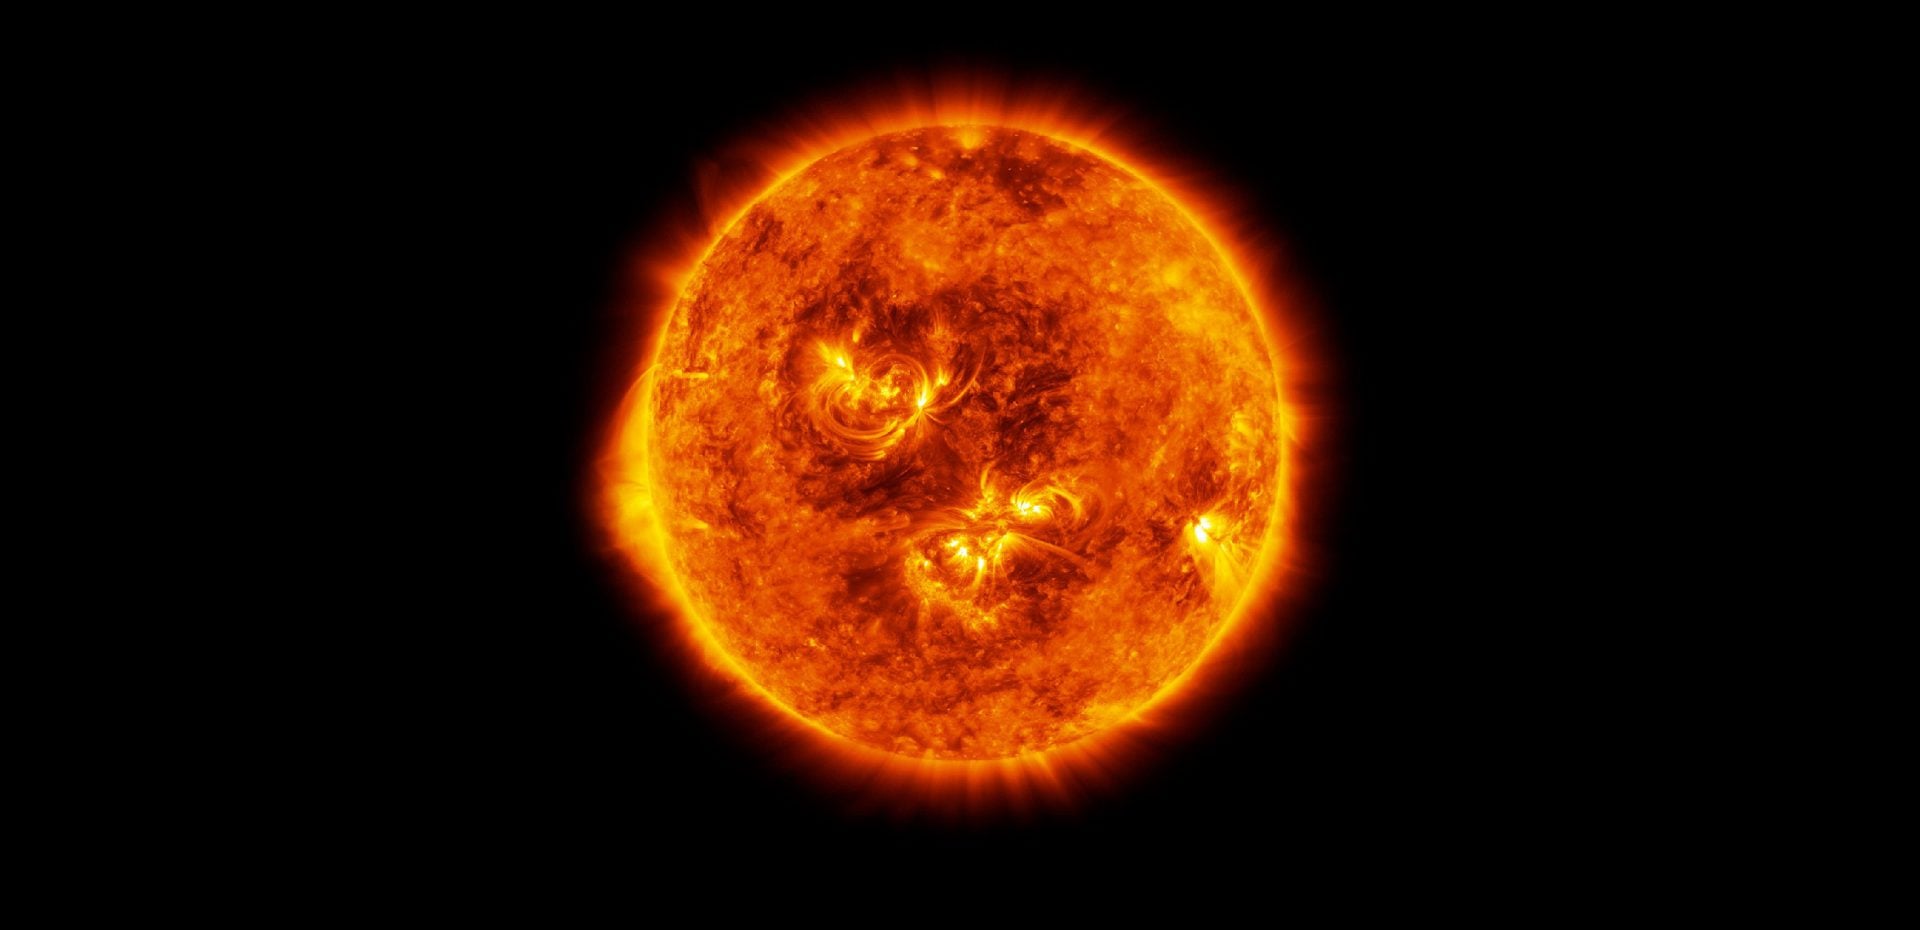 پروژه ی ساخت خورشید مصنوعی توسط پژوهشگران!